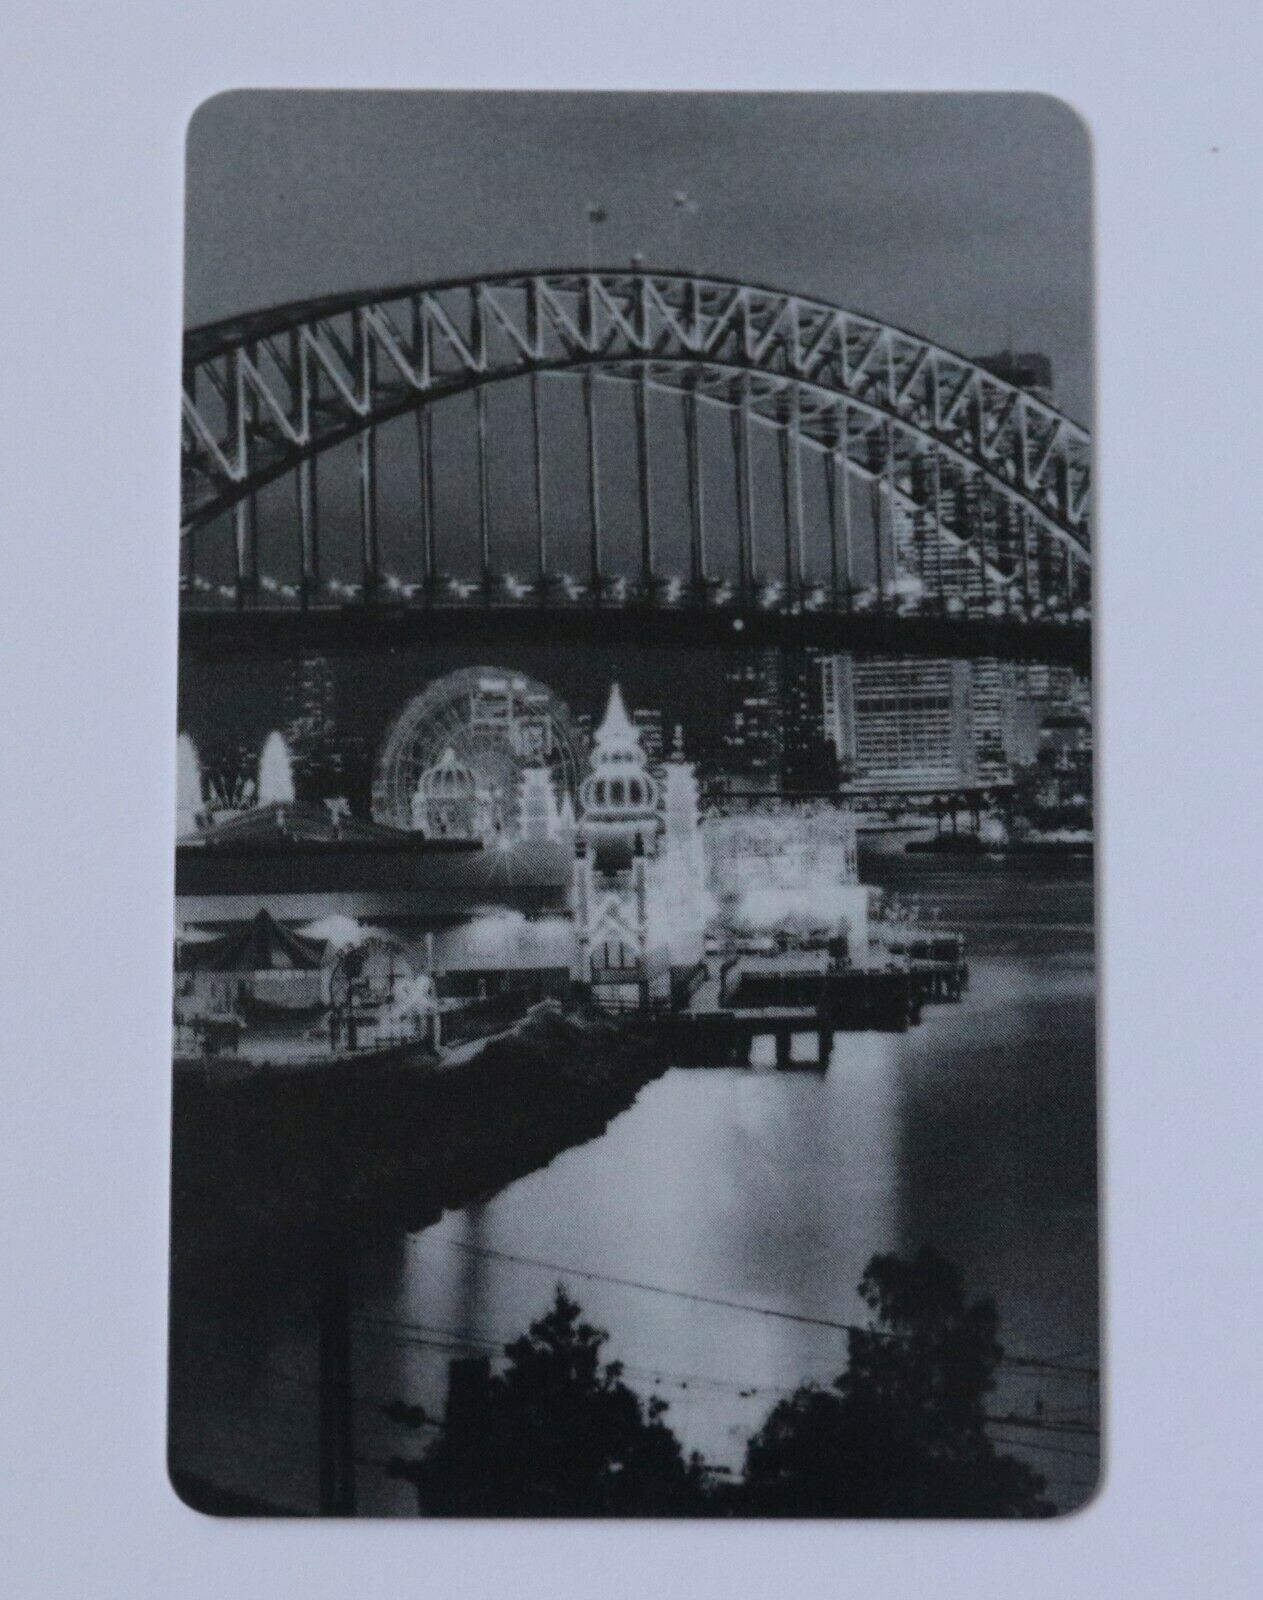 Park Hyatt Room Key Card From Sydney Australia Luxury Hotel Bridge Luna Park